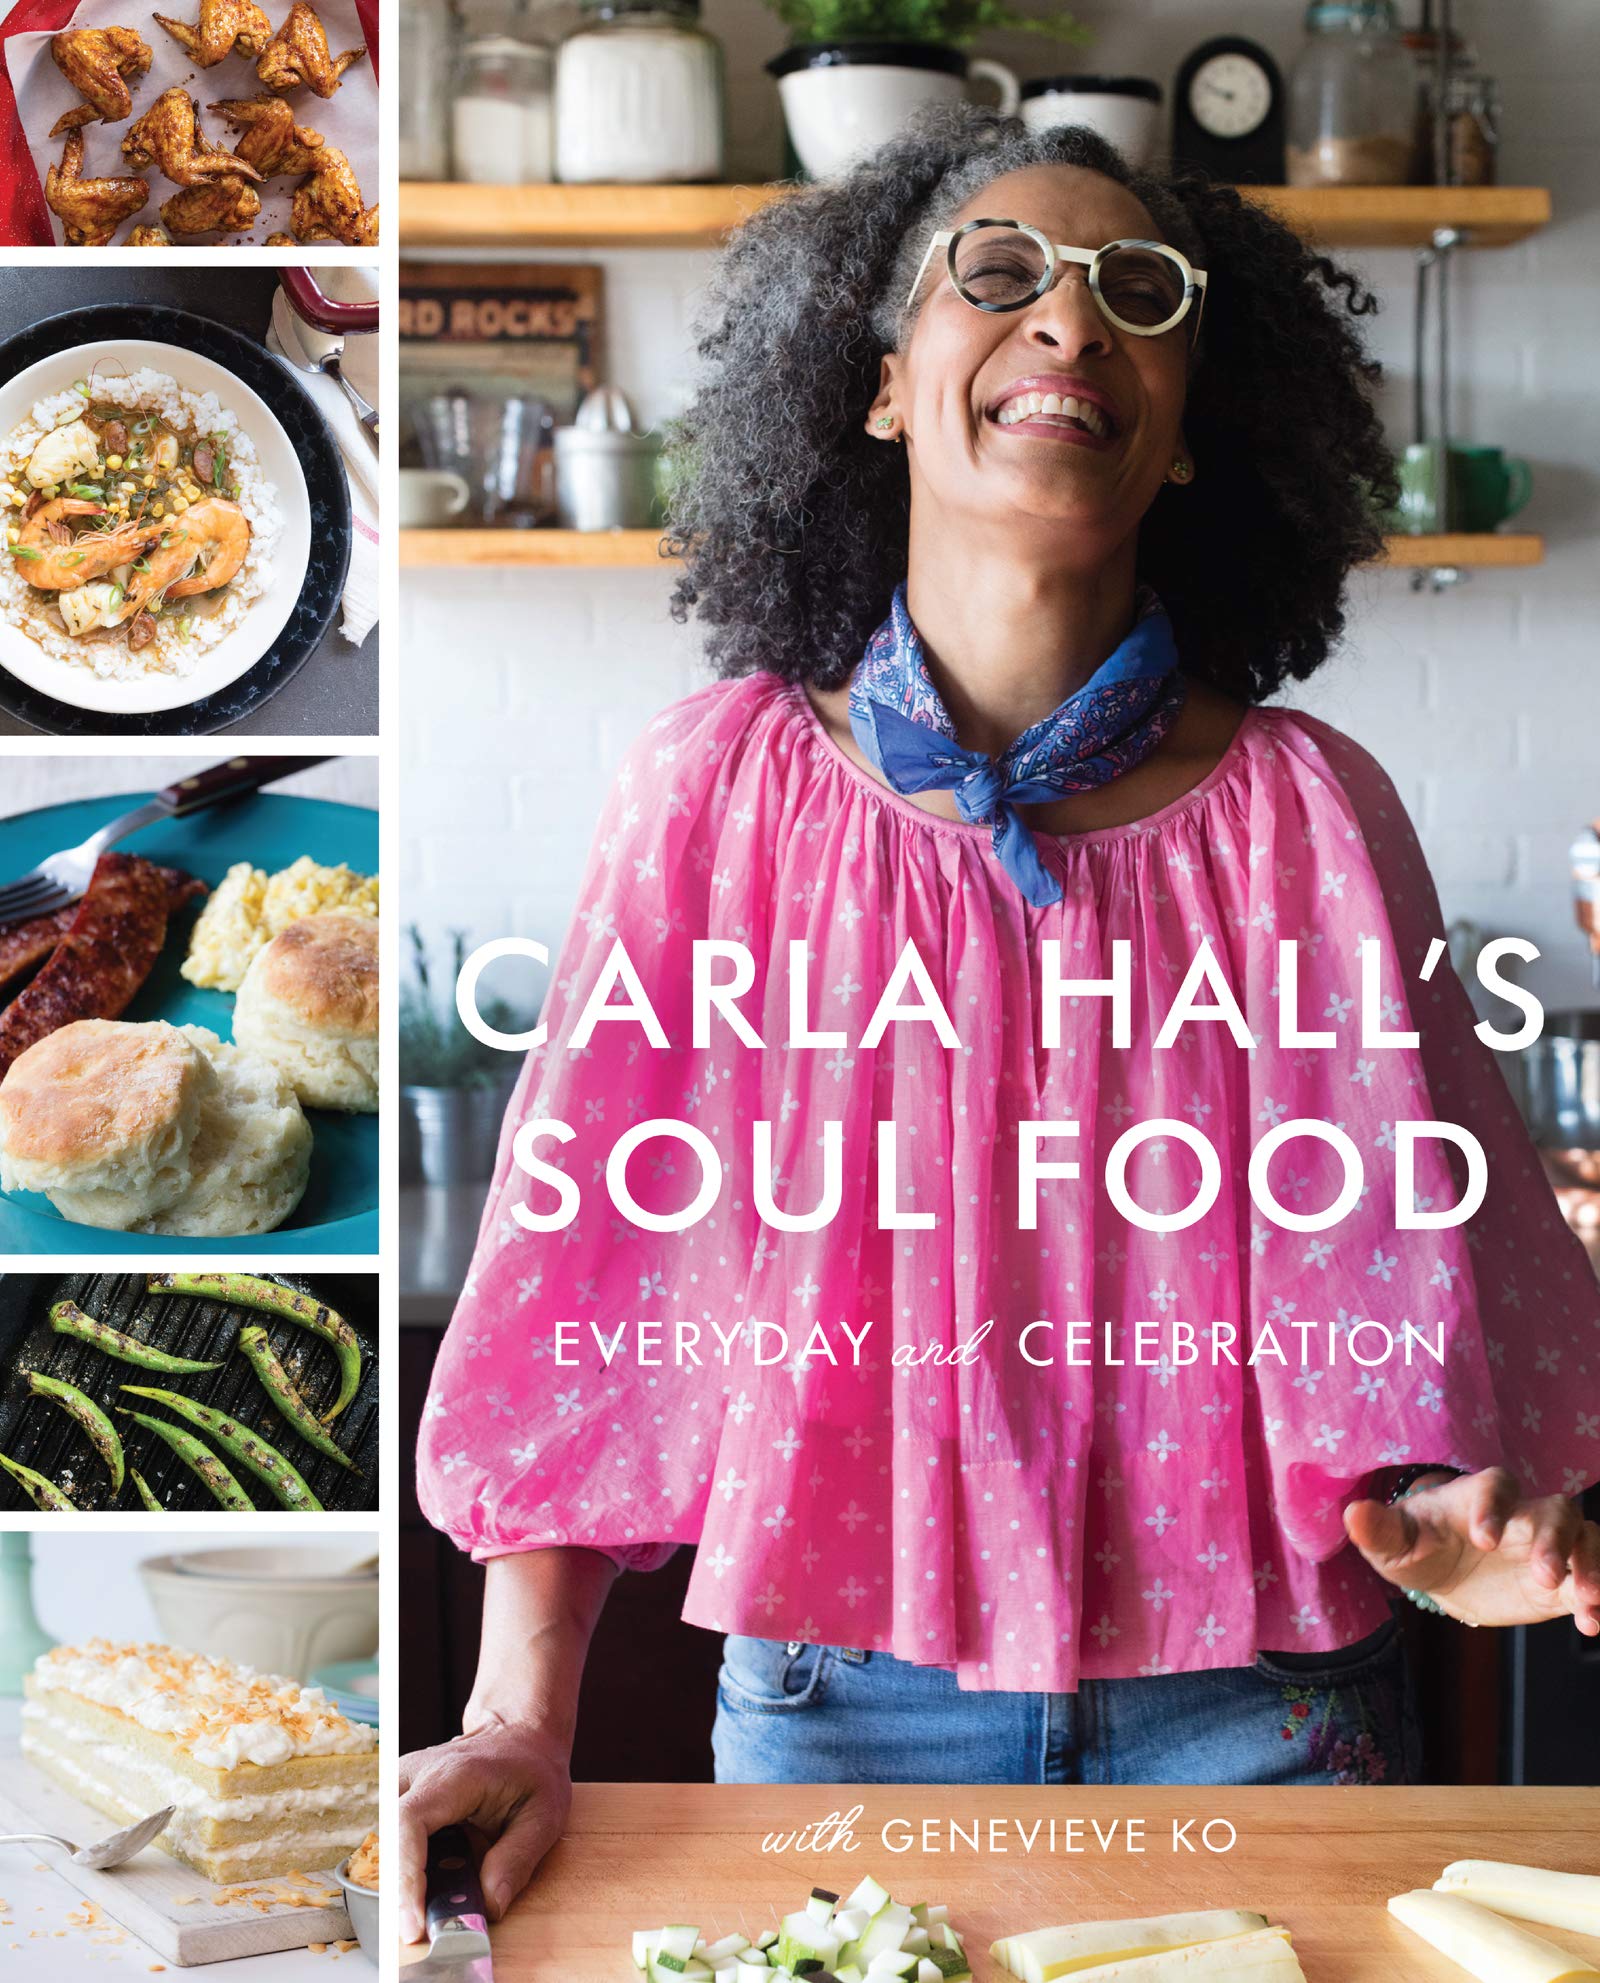 Image for "Carla Hall's Soul Food"